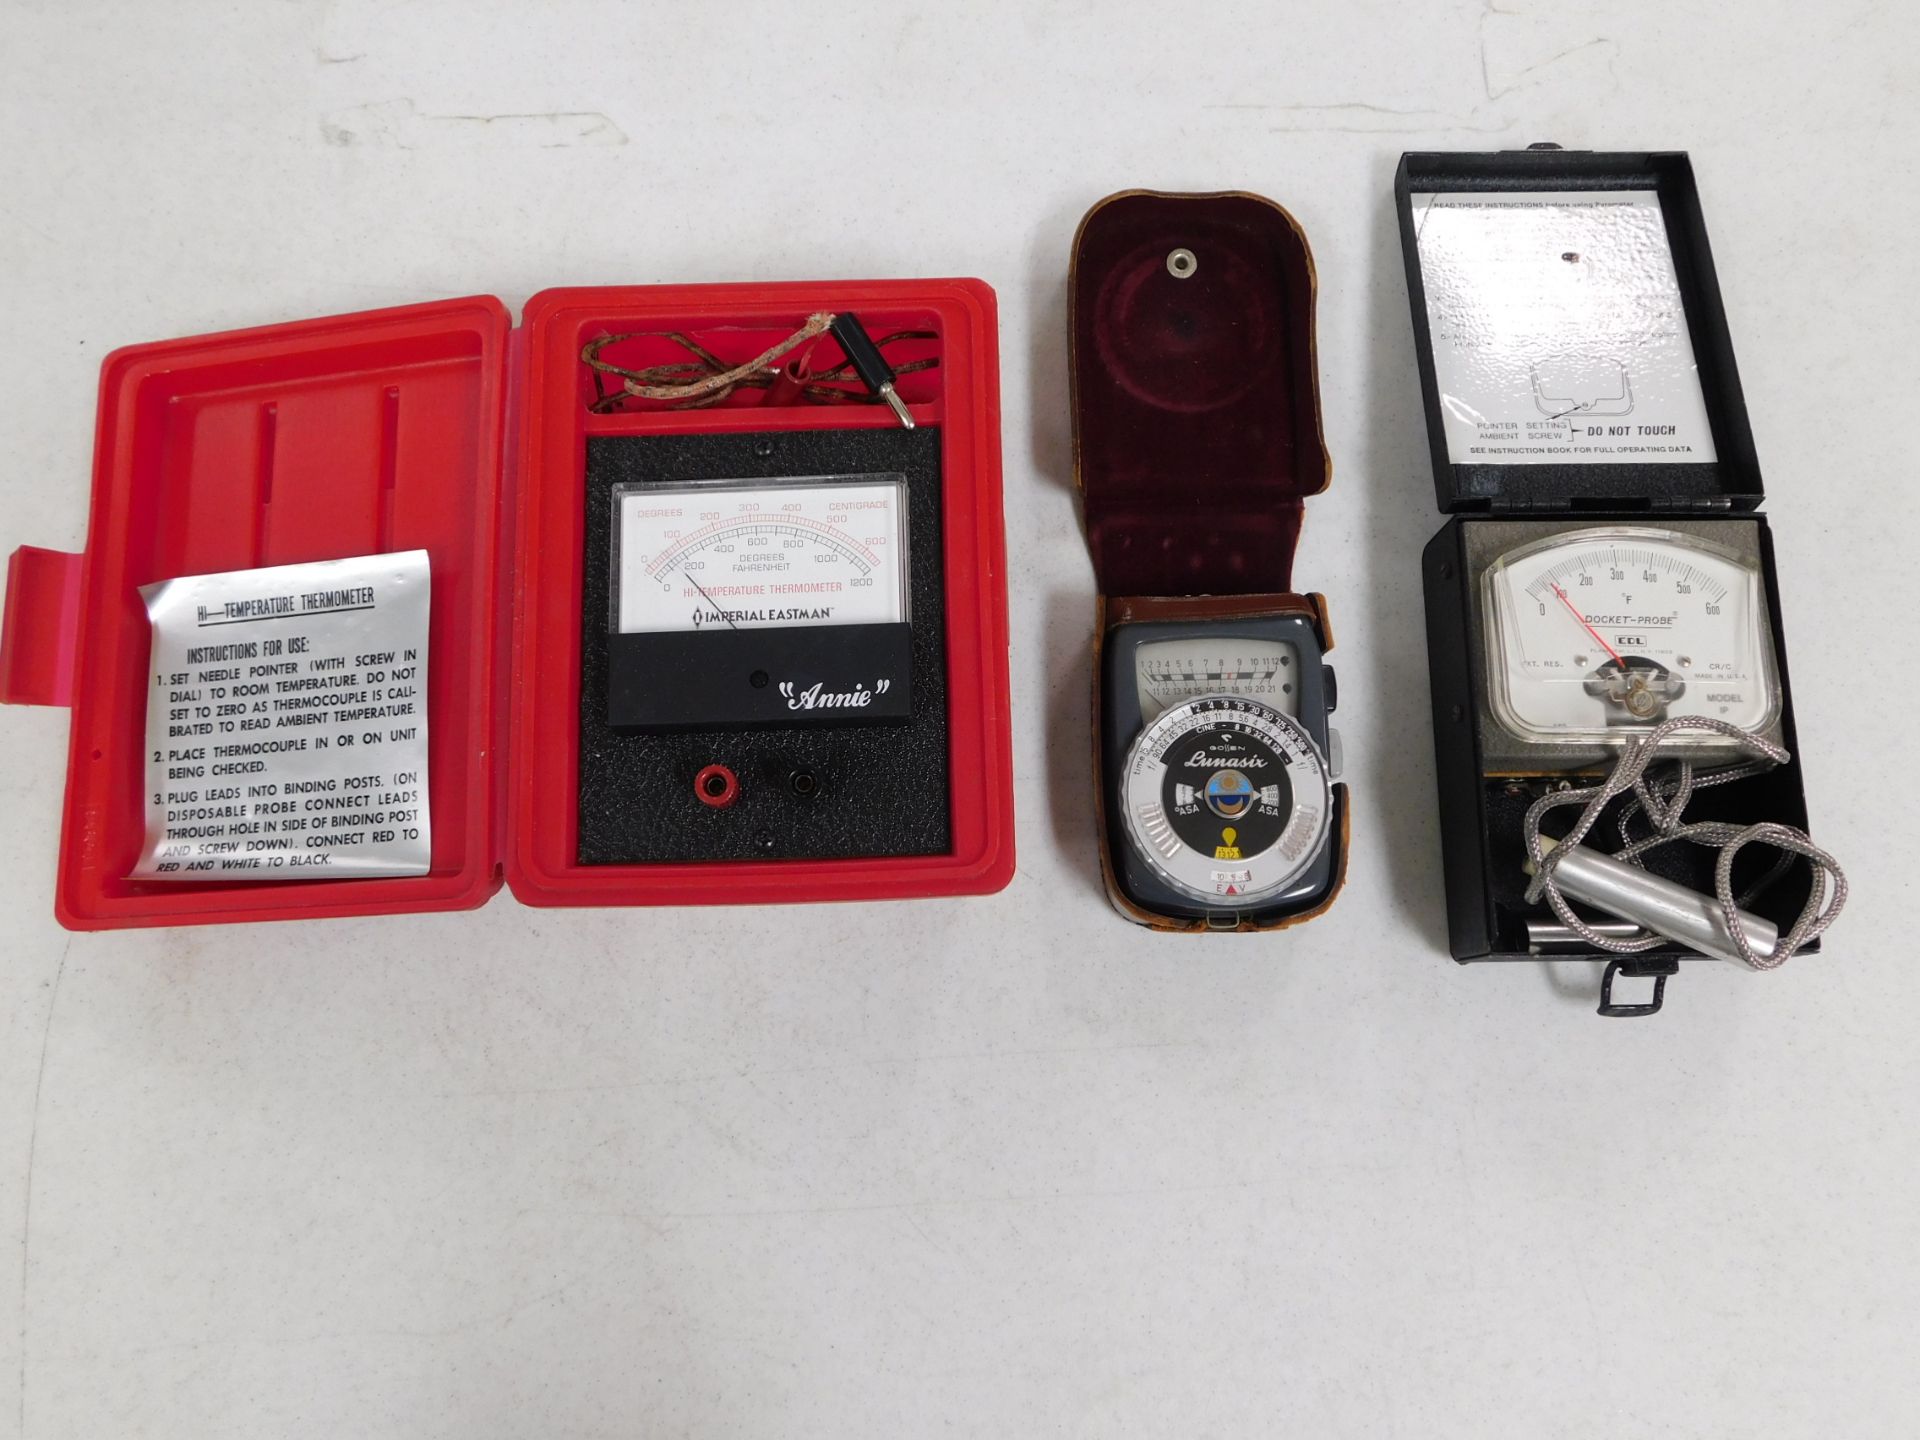 EPL Pocket Probe Pyrometer, Gossen Lumasix Light Meter, and Annie A-15 Hi-Temperature Thermometer